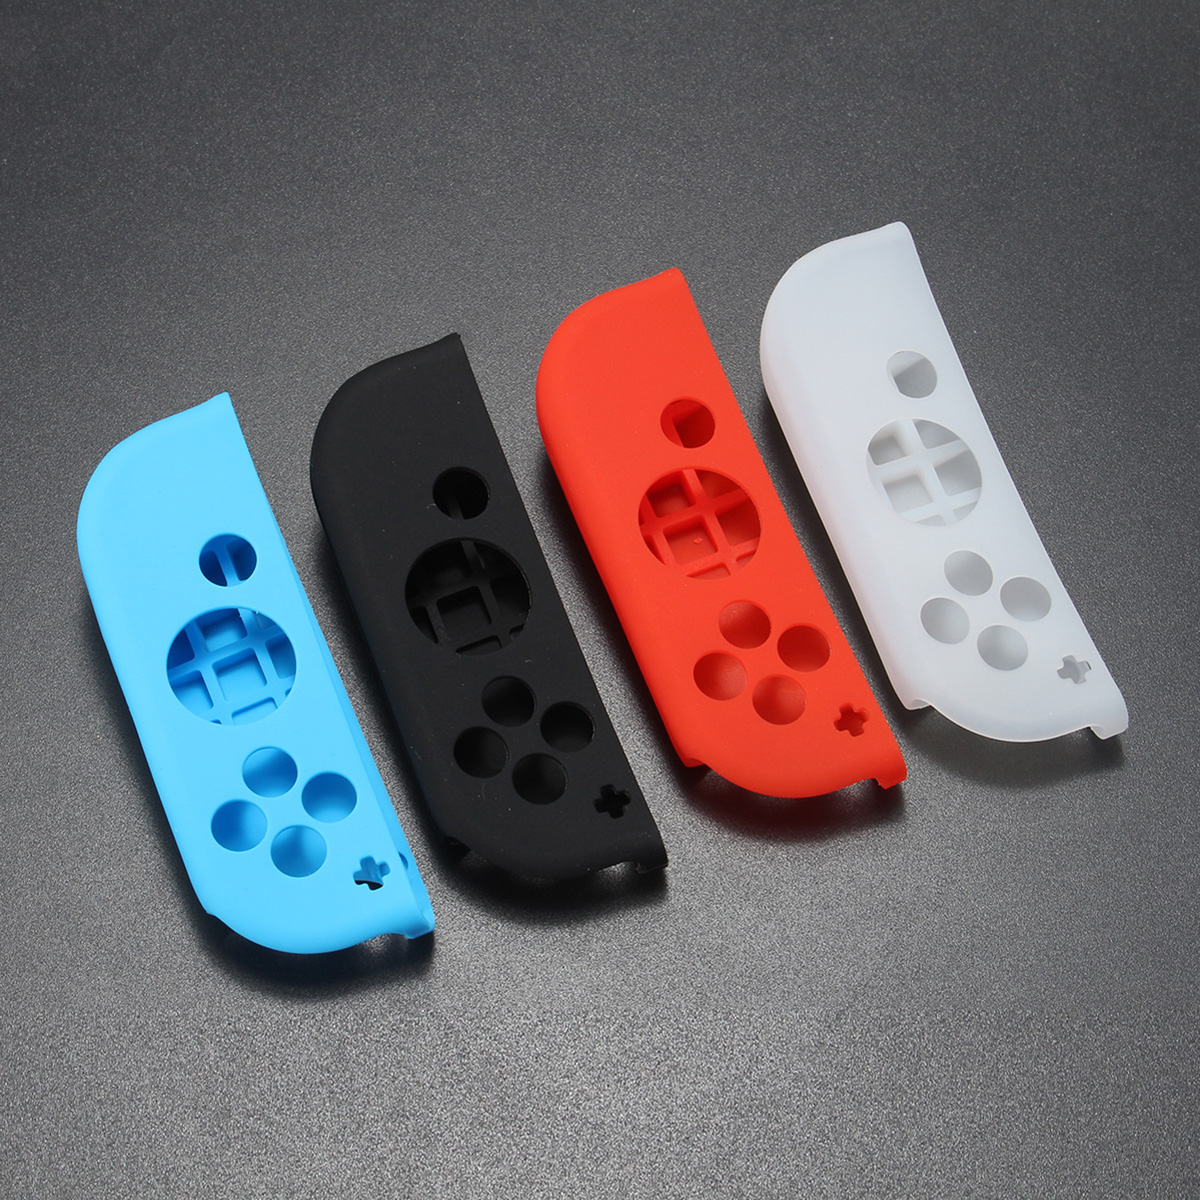 Silicon Case Protective Impact Resistant Rubber Skin Cover For Nintendo Switch Joy-Con Controller 8